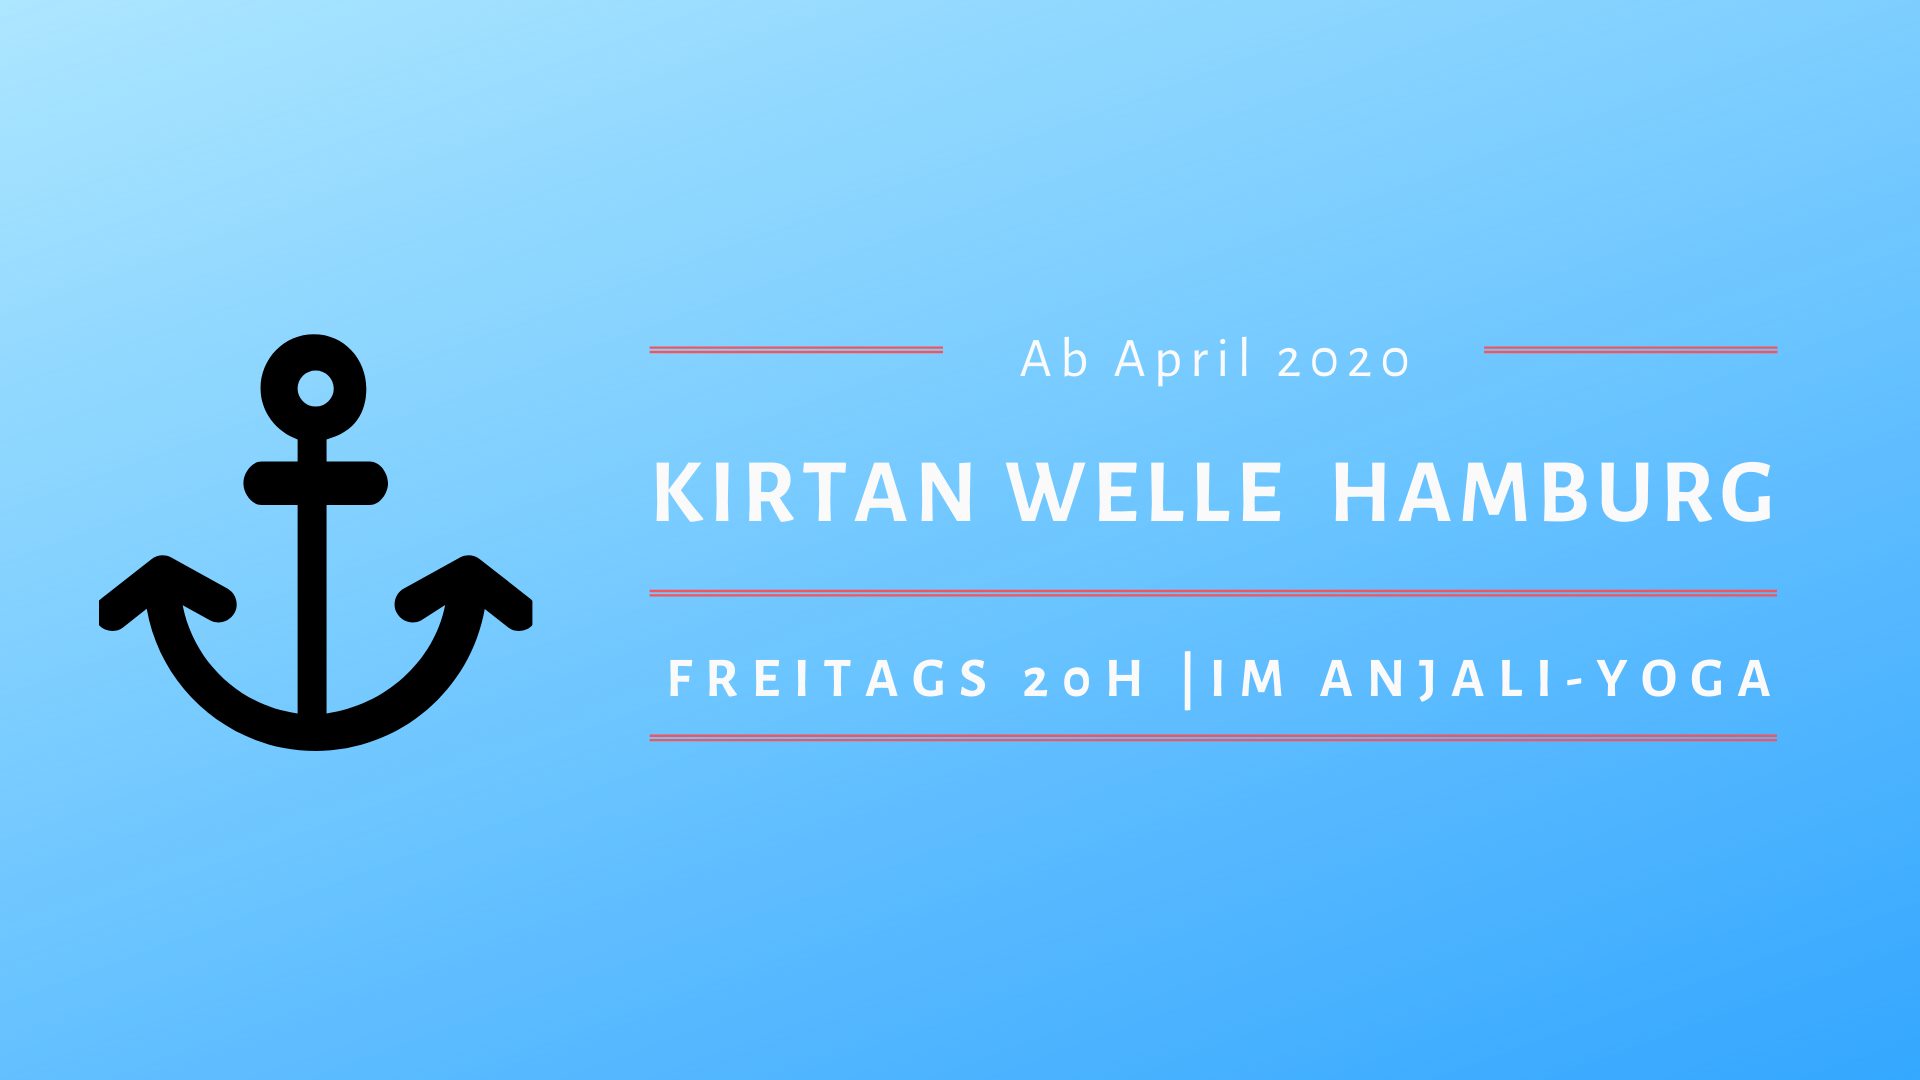 Kirtan Welle Hamburg